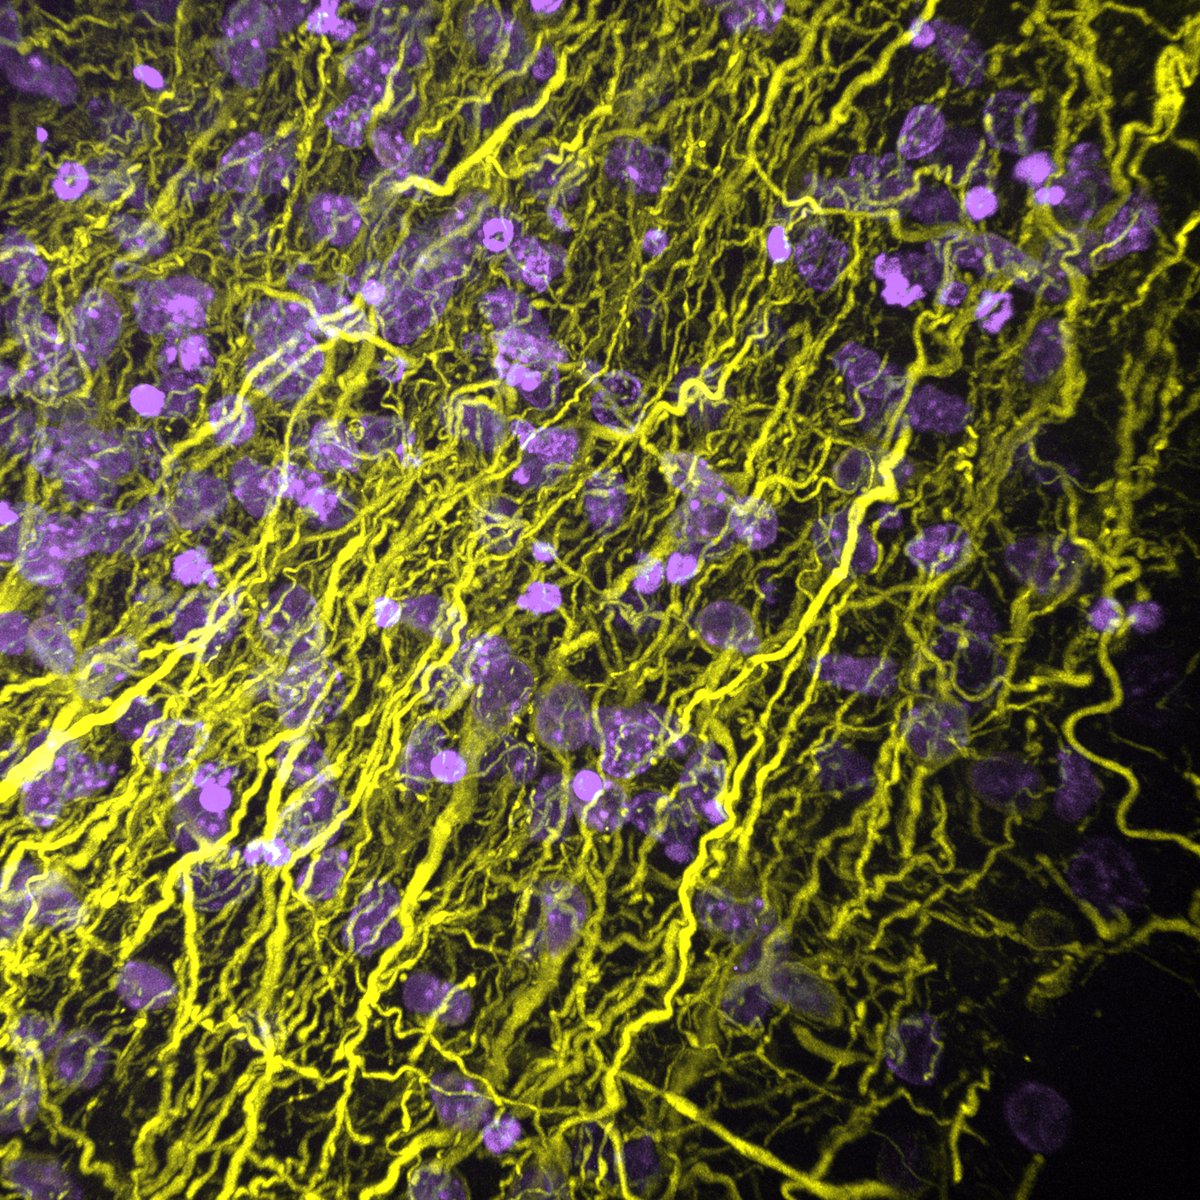 Fluorescent neurons in a cerebral organoid
#FluorescenceFriday #SciArt #Popart #brainorganoid #cerebralorganoid #mylittlebrainorganoid